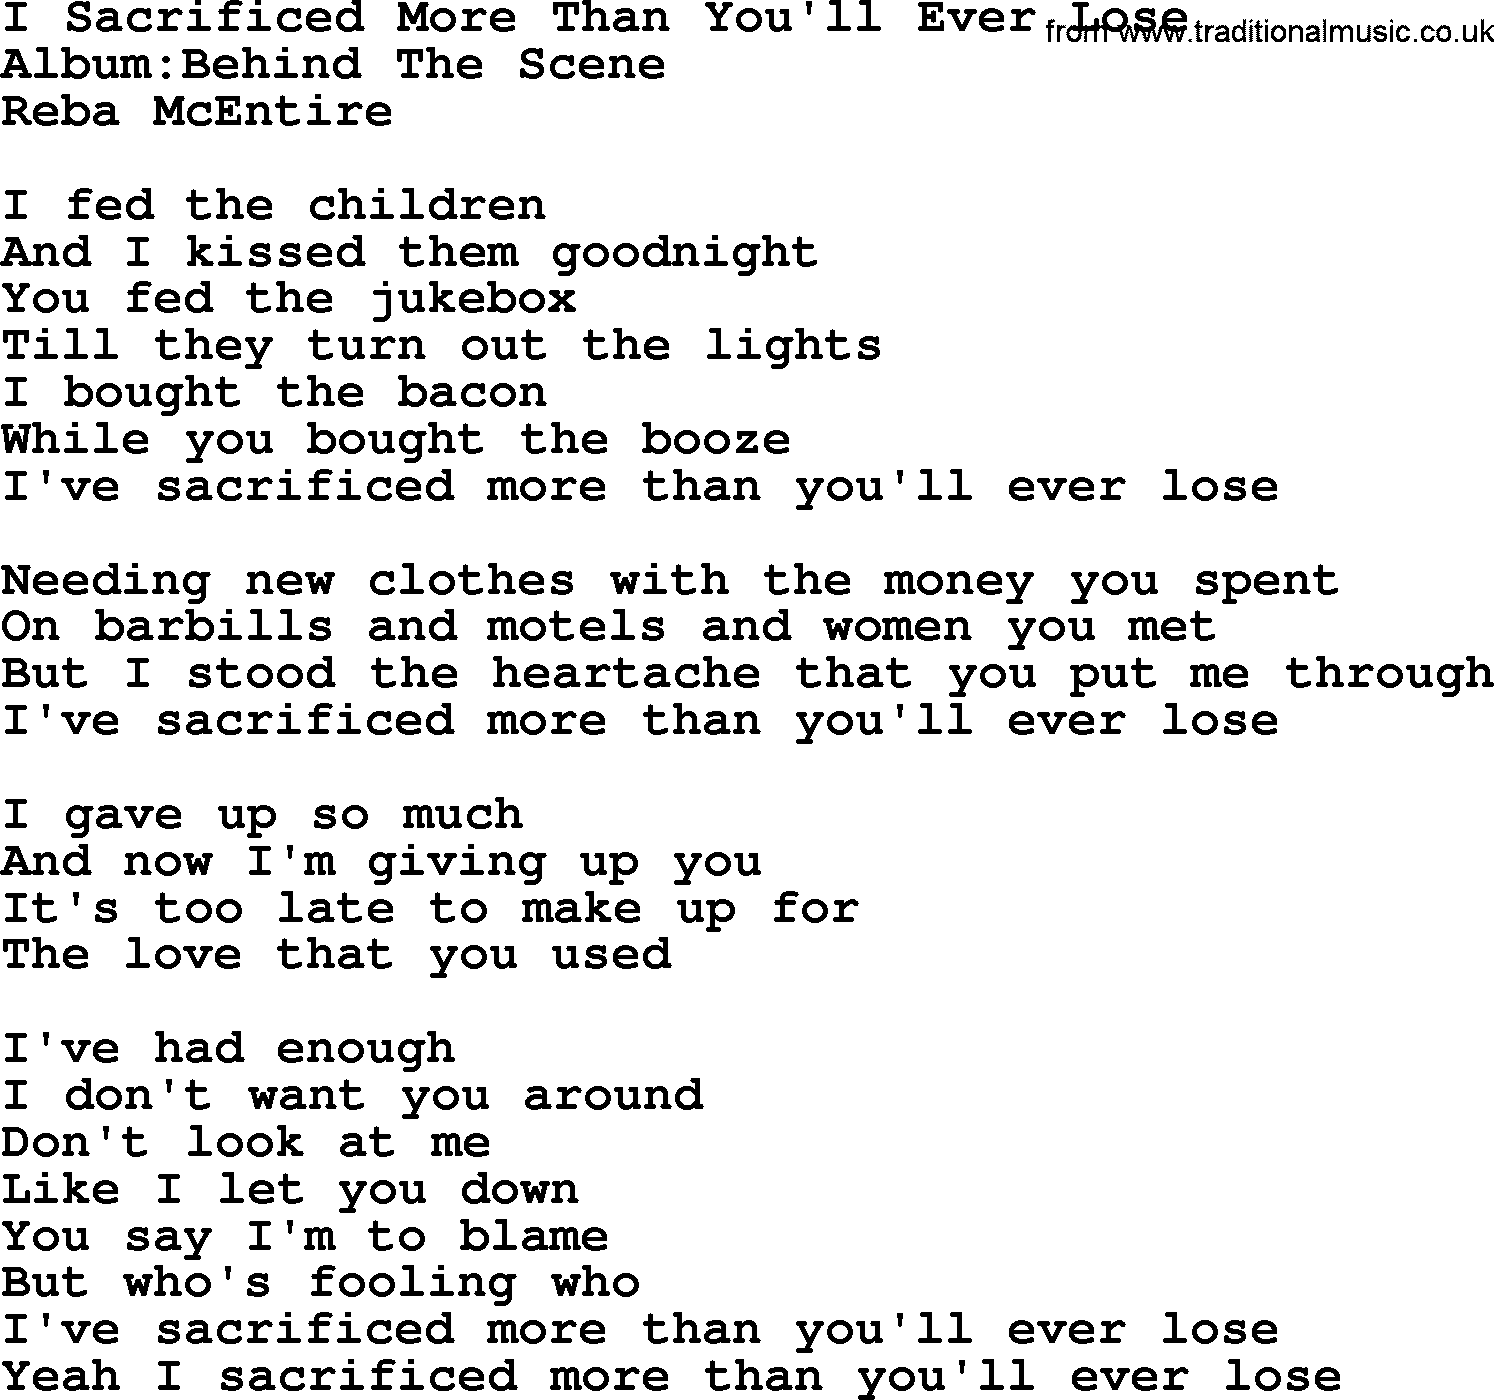 Reba McEntire song: I Sacrificed More Than You'll Ever Lose lyrics